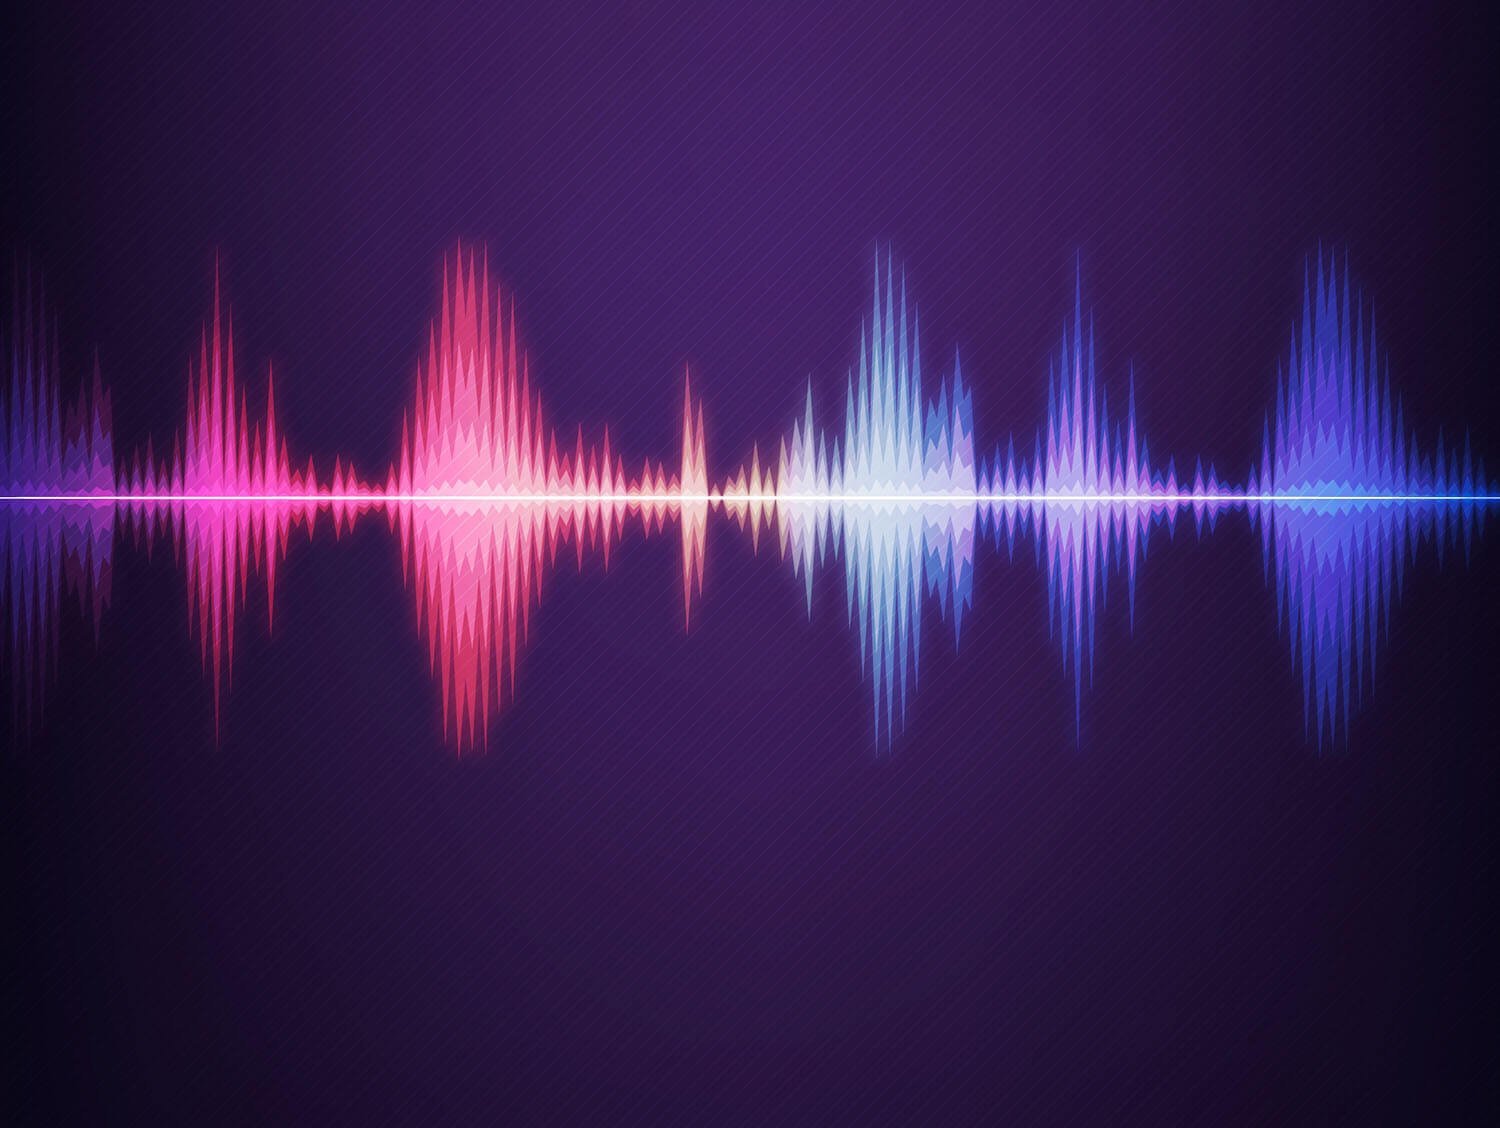 Voice bit. Звуковая волна. Музыкальная волна. Волны звука. Звуковая дорожка.